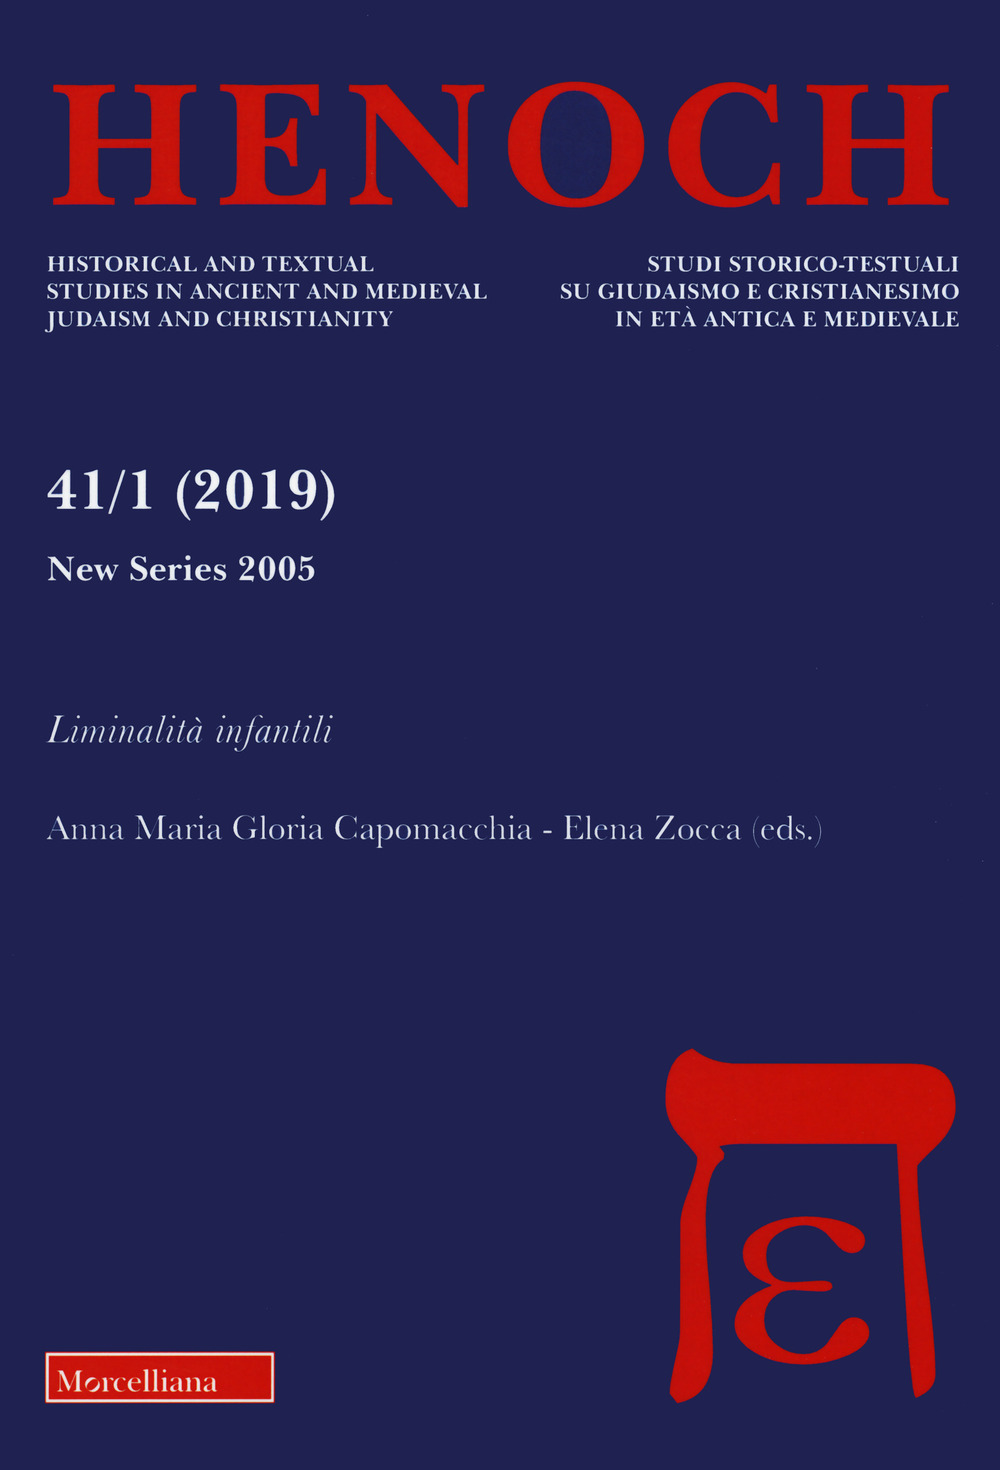 Image of Henoch (2019). Vol. 1: Liminalità infantili.